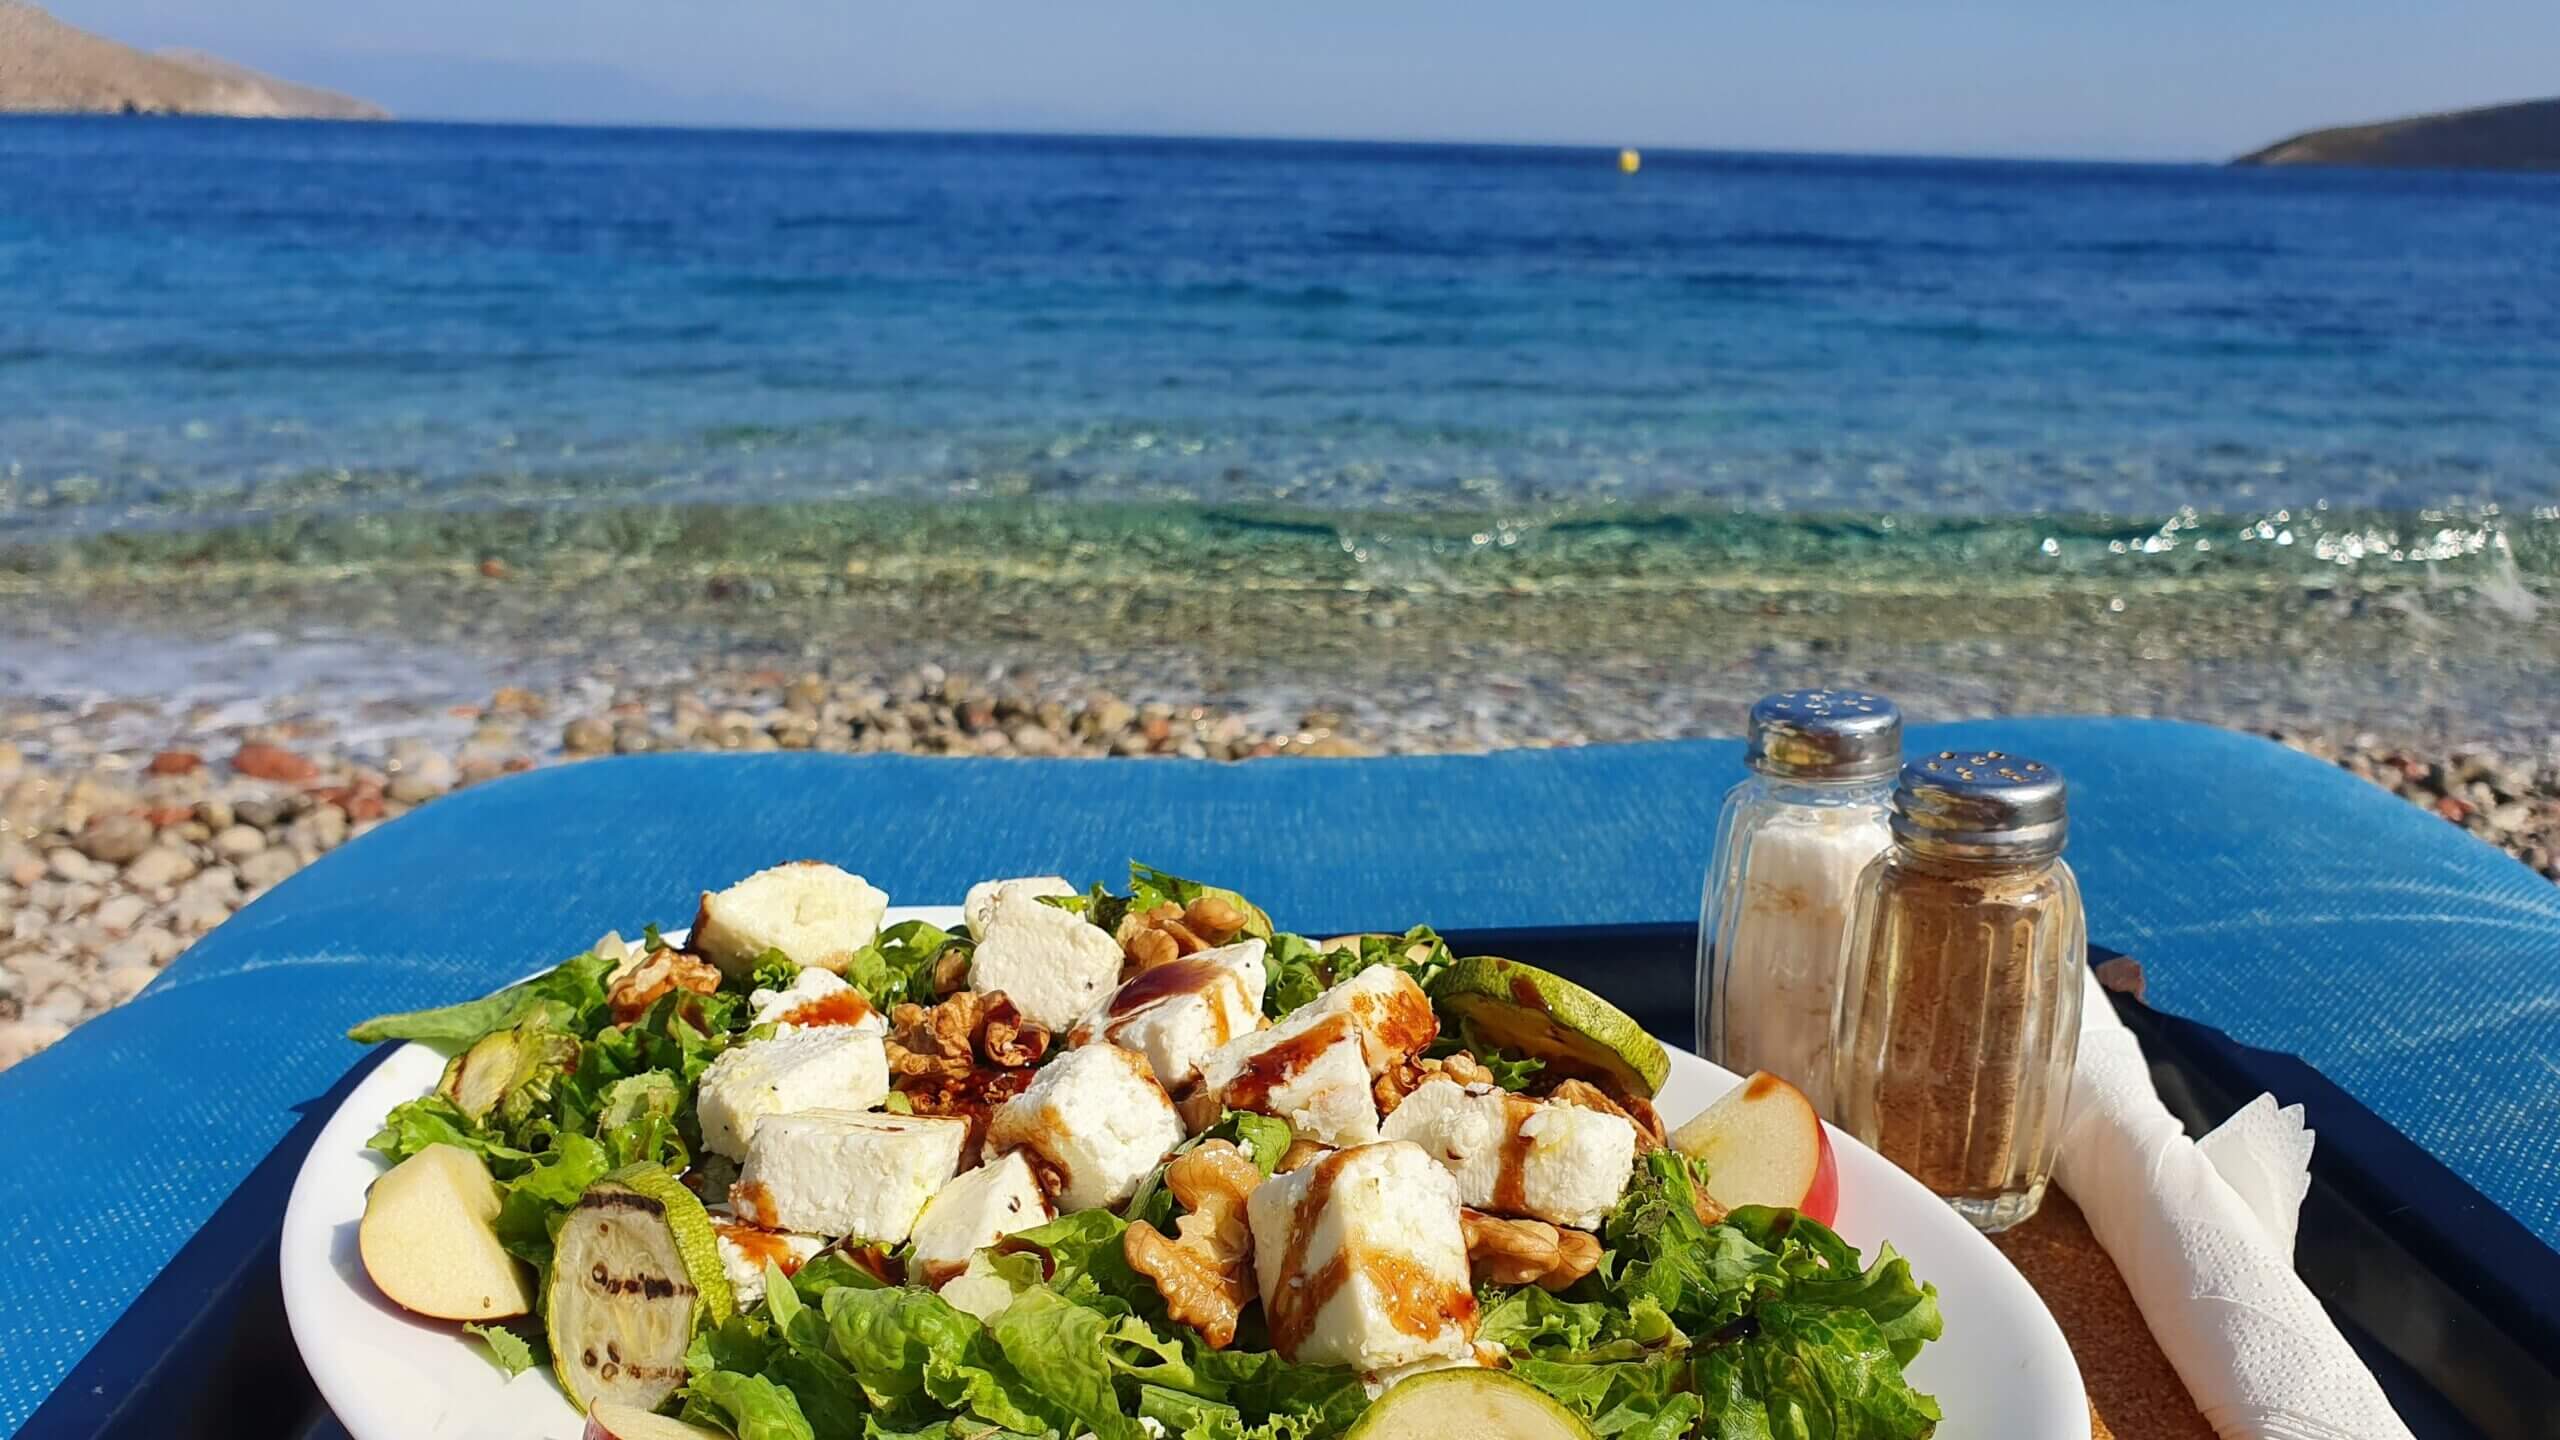 Manouri Salat am Strand von Livadia